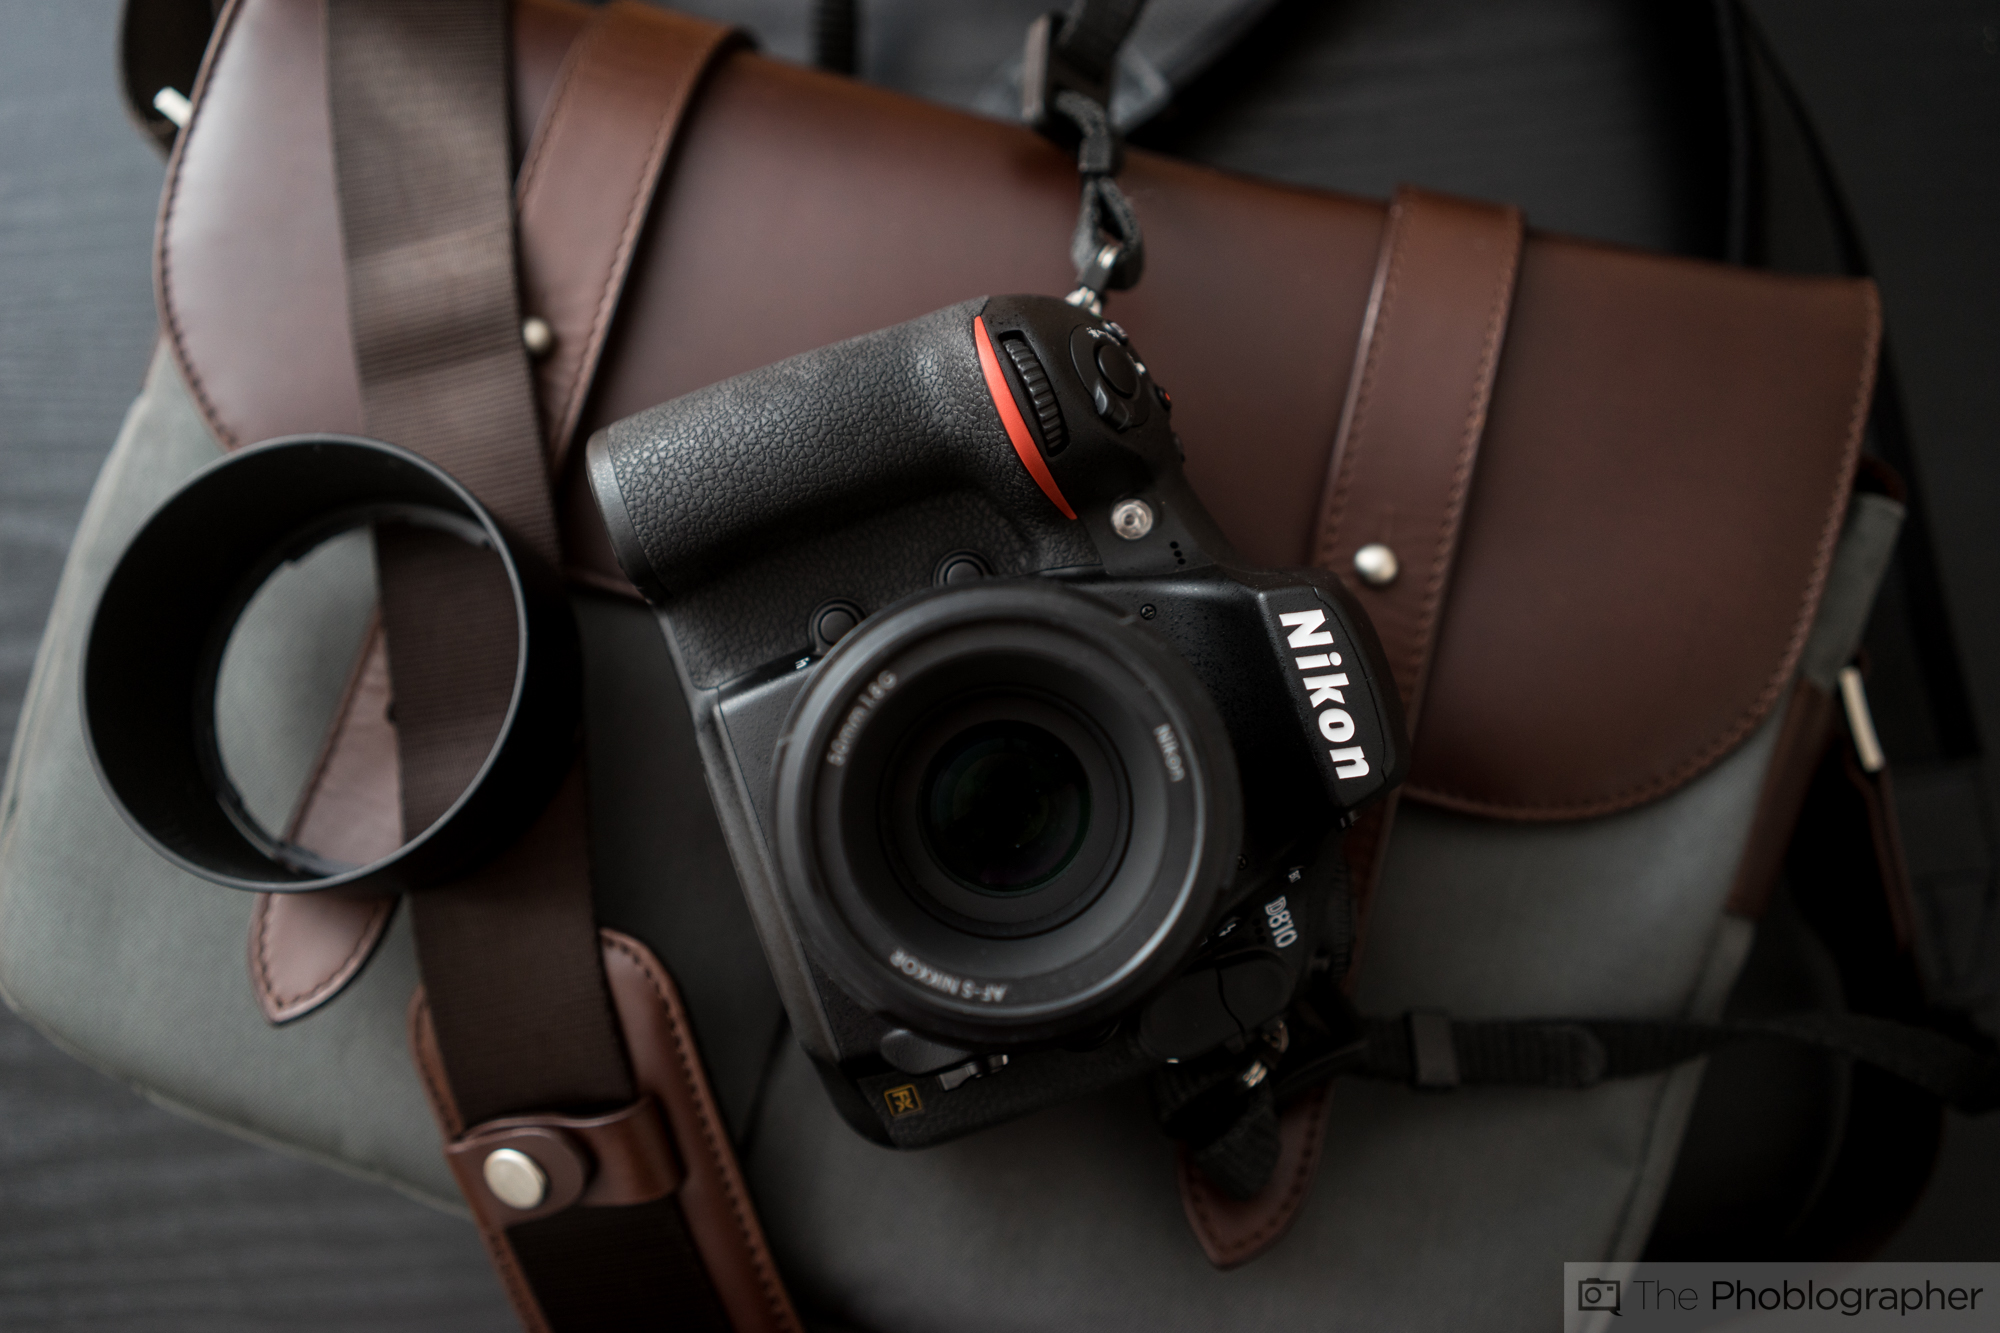  Nikon D750 DSLR Camera with 18-140mm Lens+The 500mm f